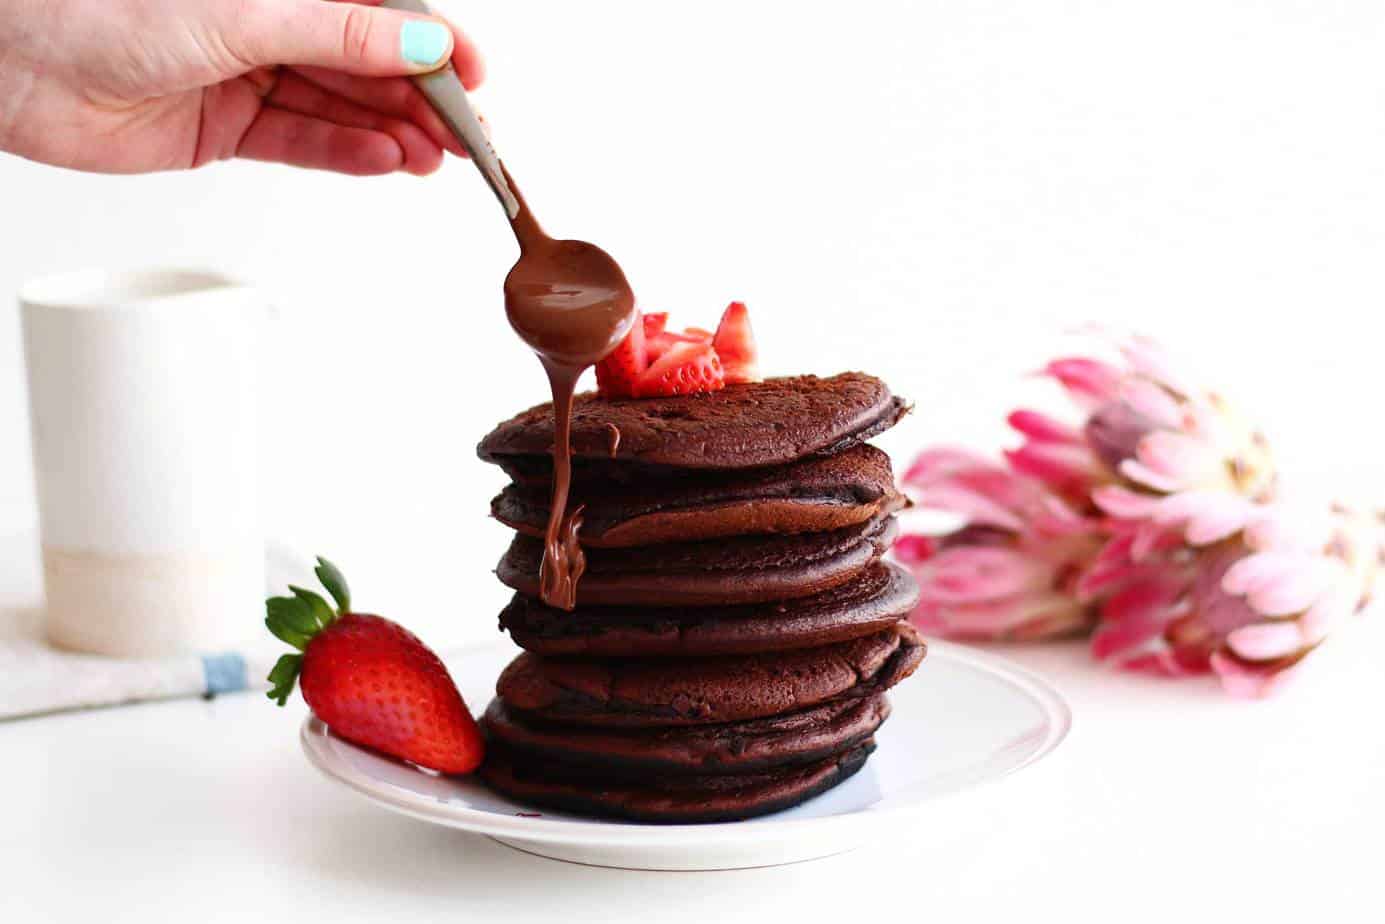 Gluten- free vegan chocolate pancakes - an easy, delicious healthy breakfast recipe